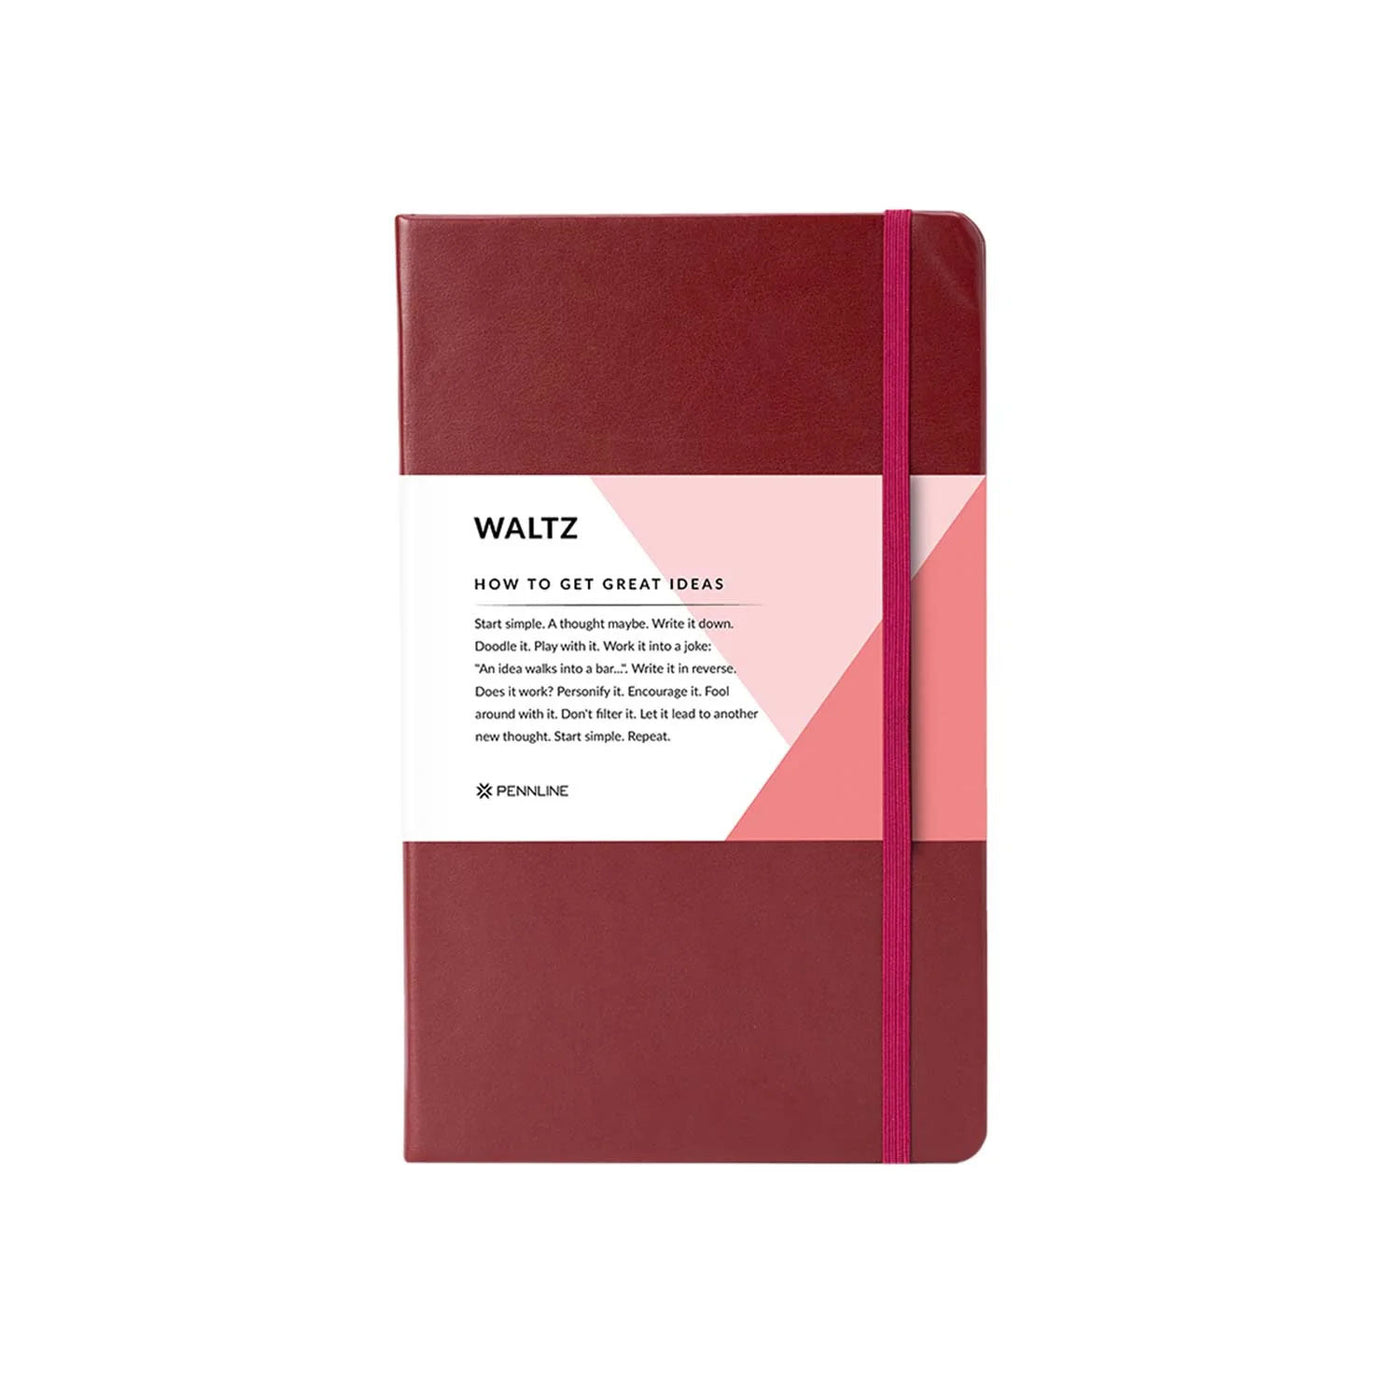 Pennline Waltz Hard Cover Notebook, Marron - Ruled 1